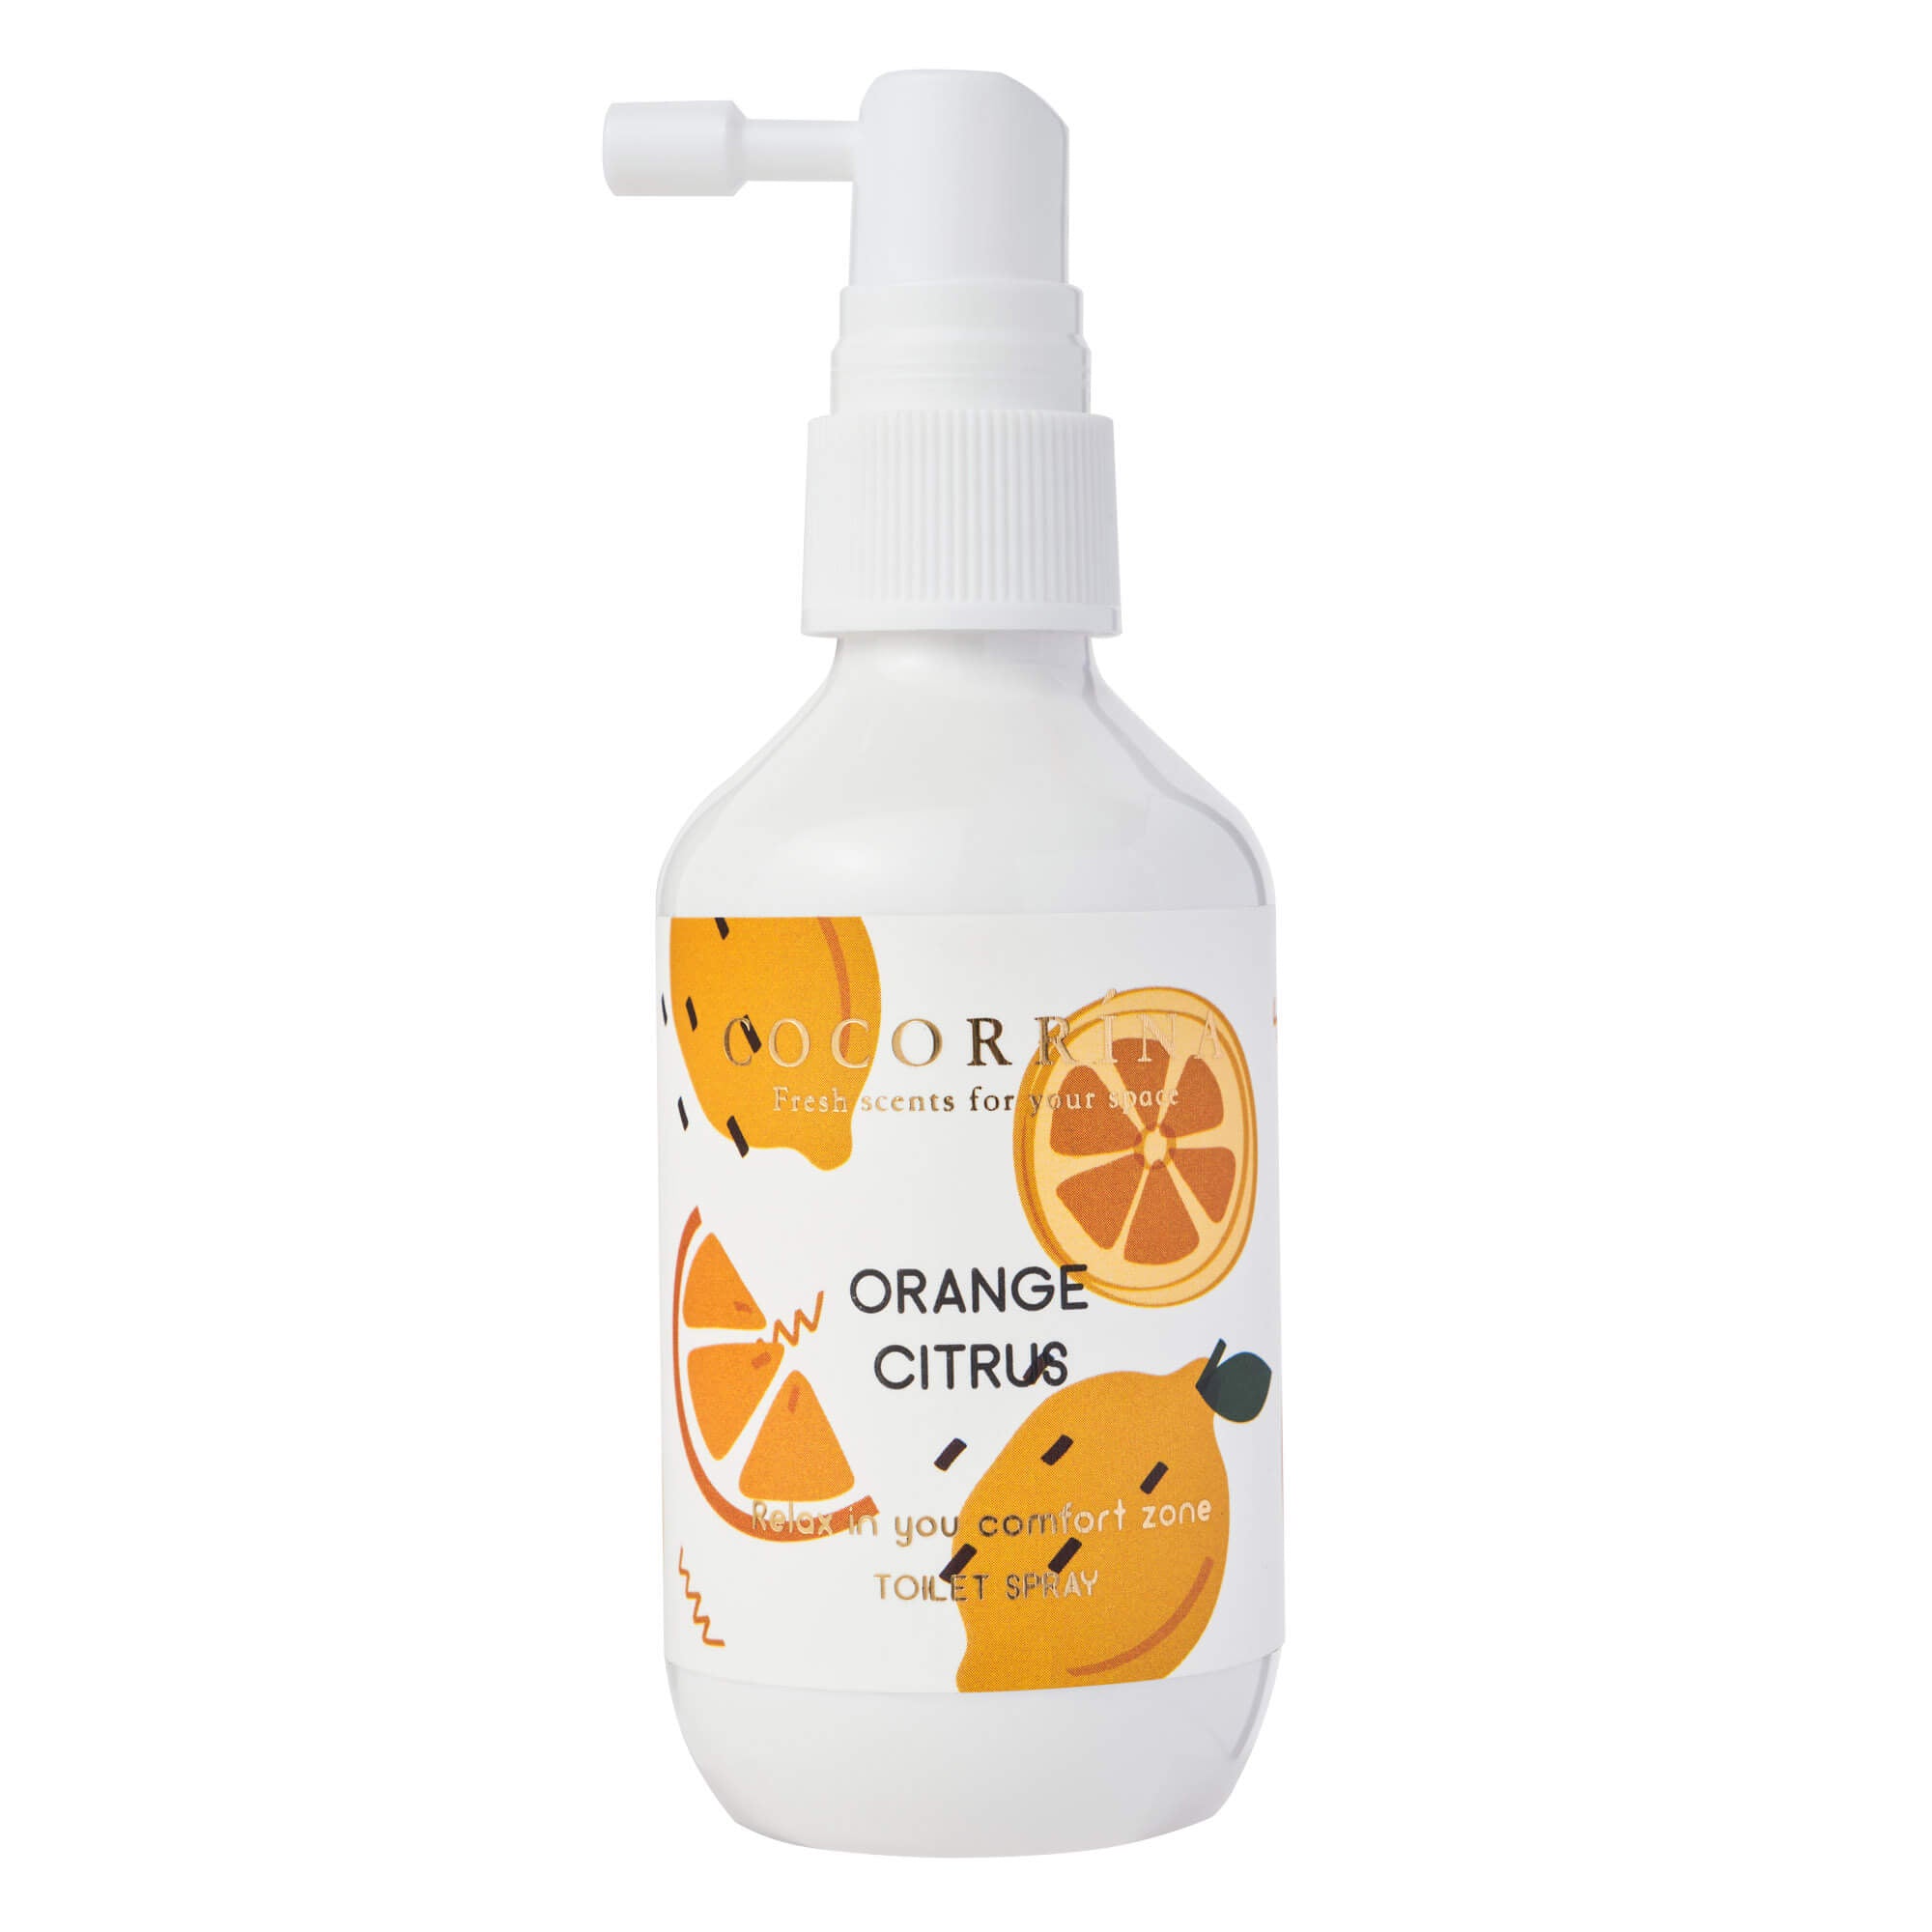 Spray de toilette aux agrumes Orange cocorrina